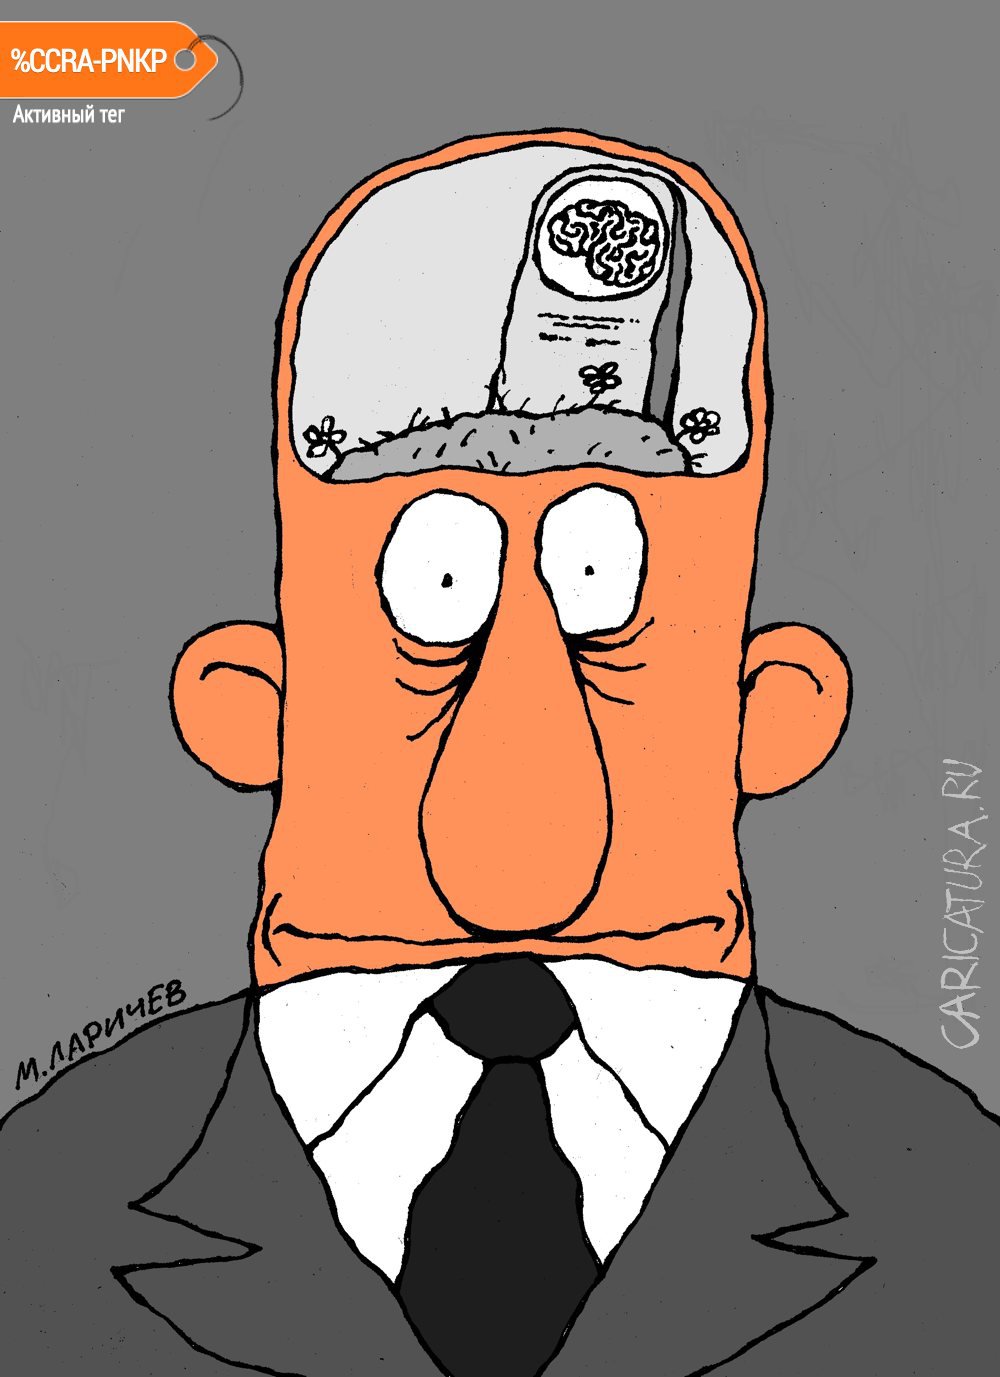 Карикатура "Могилев", Михаил Ларичев